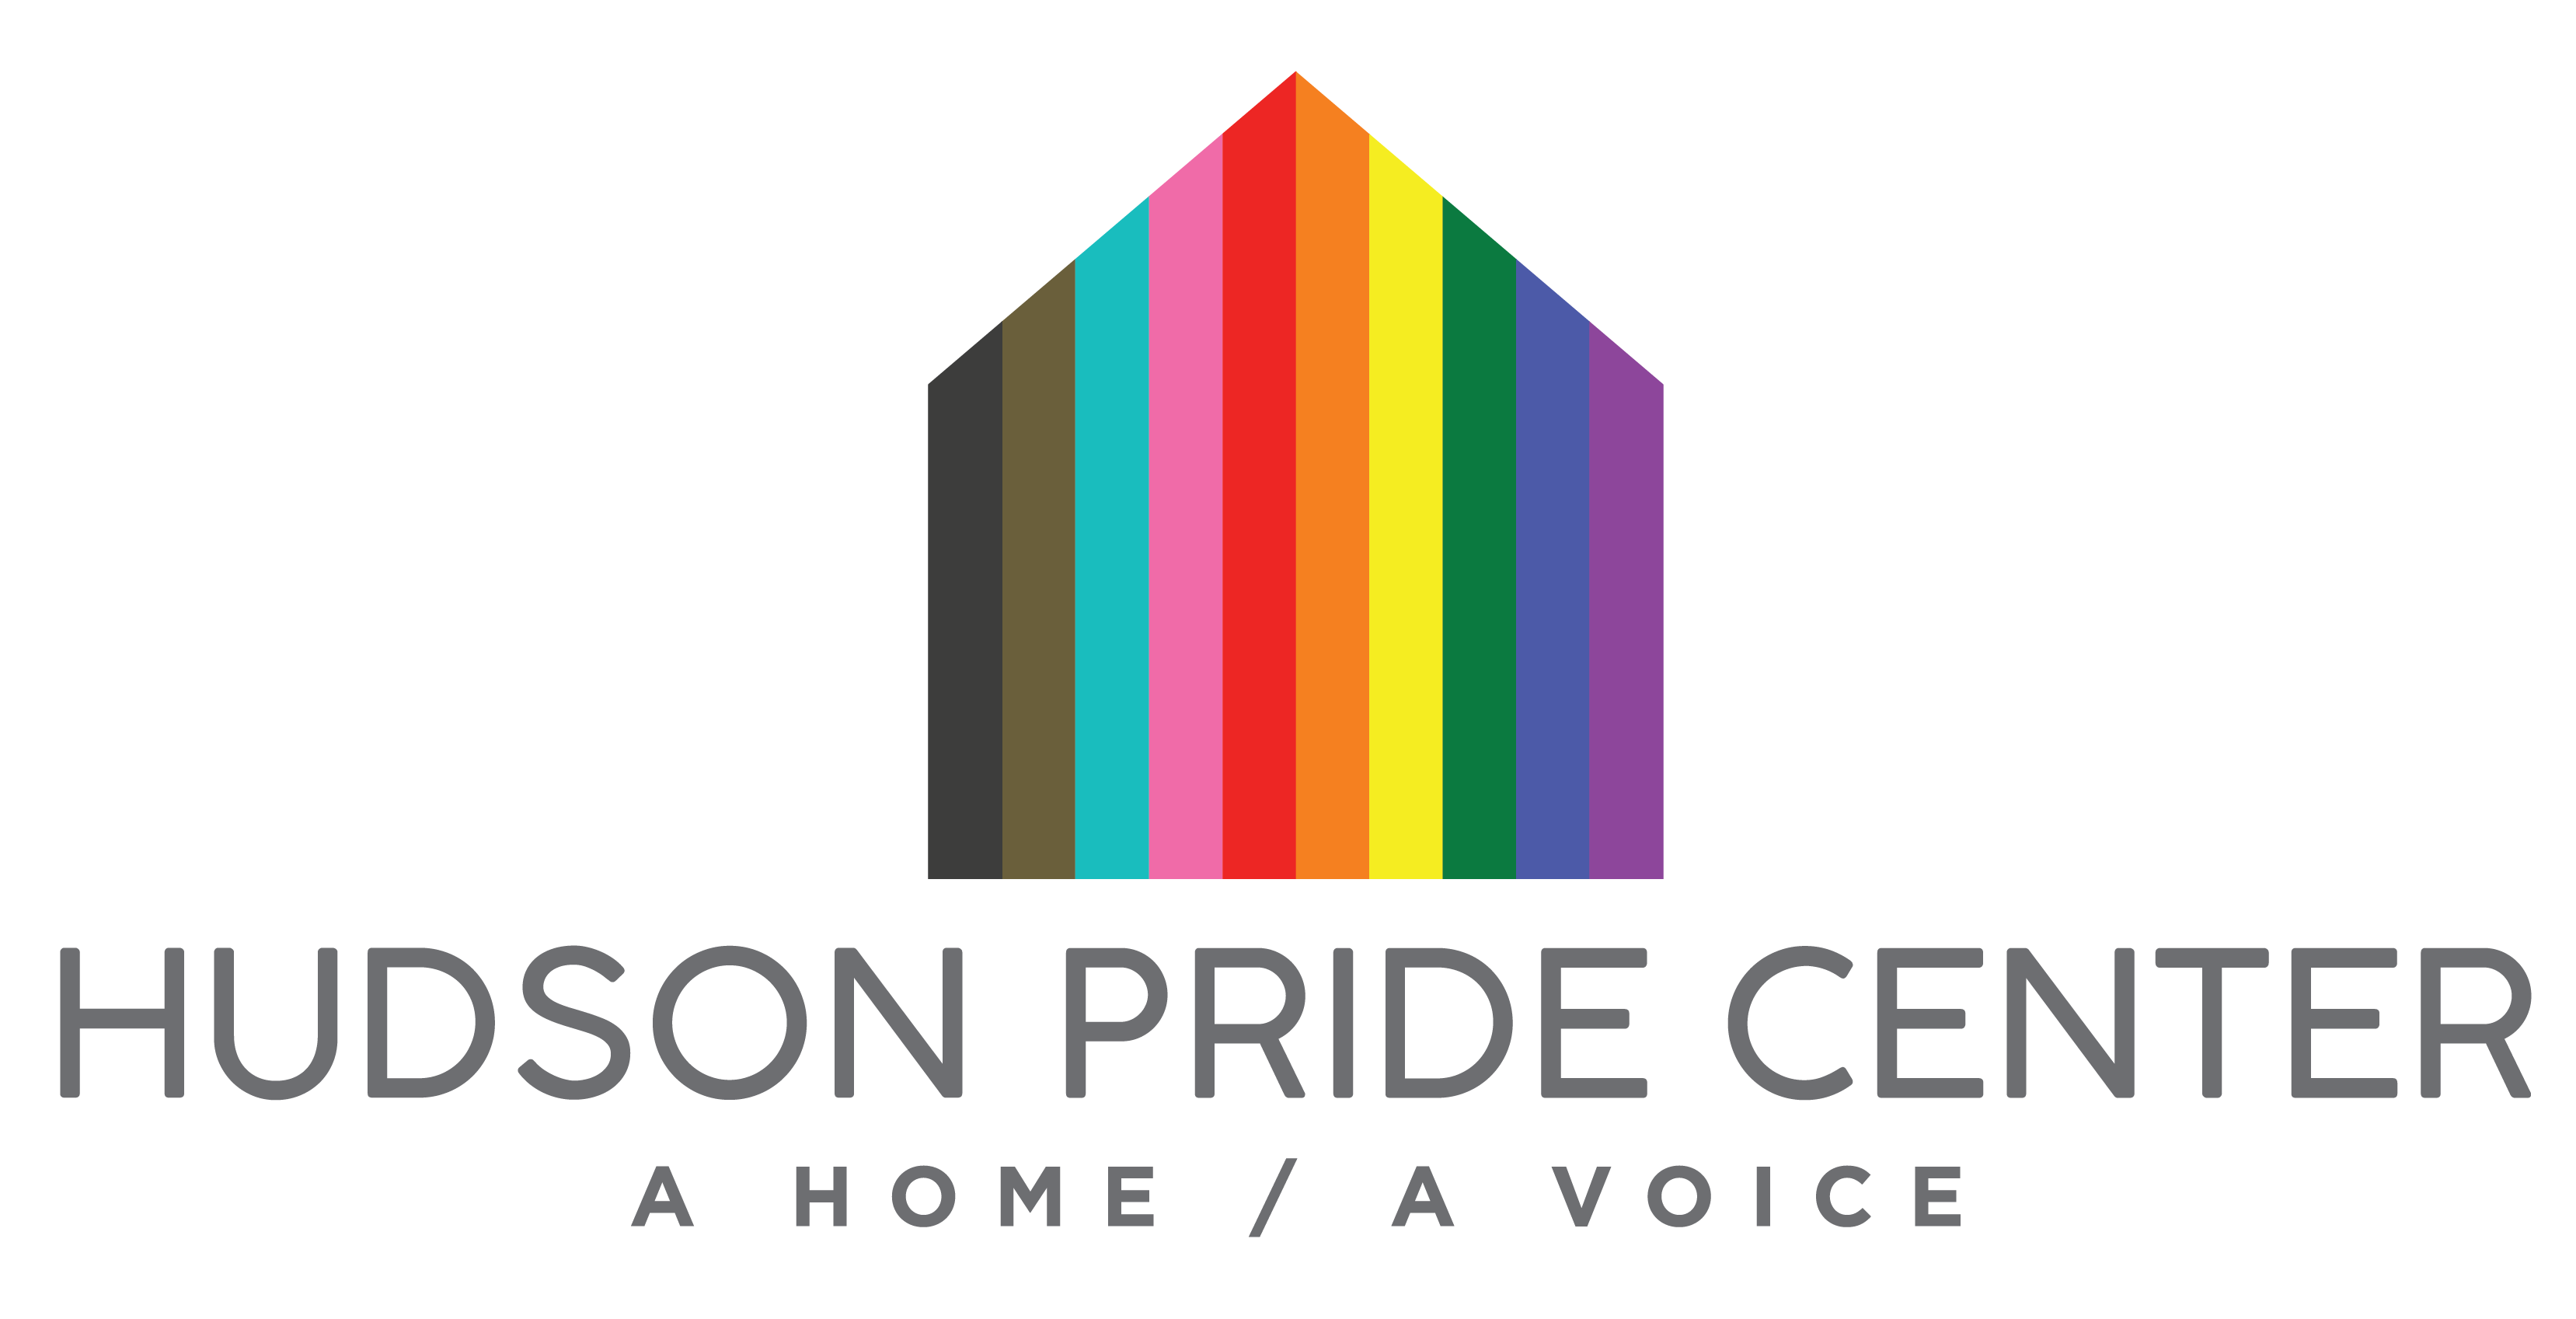 Hudson Pride Center